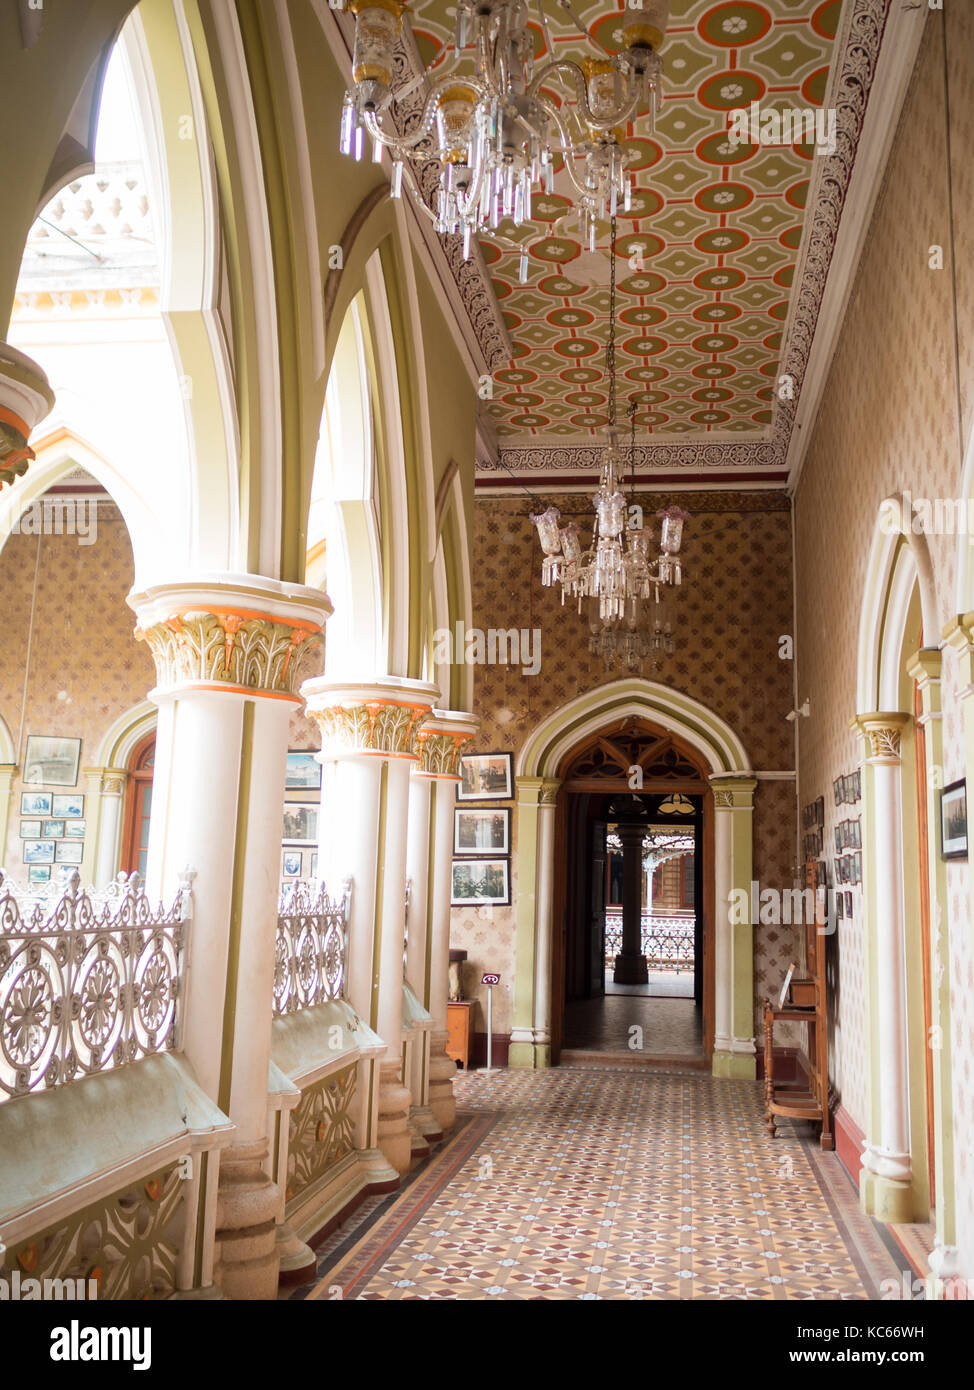 Bangalore Palace interior architecture Stock Photo